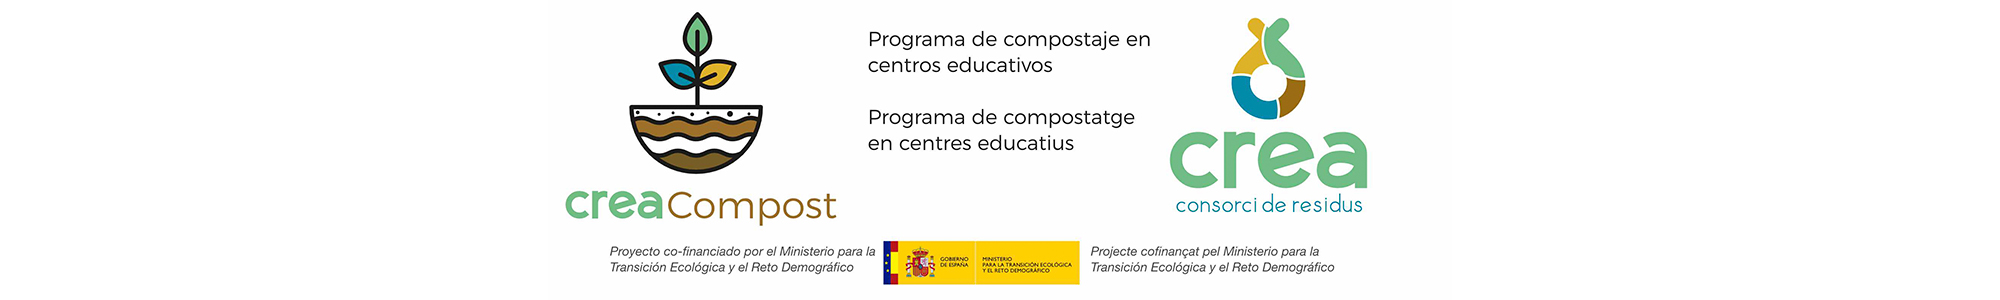 Programa de Compostaje en Centros Educativos logo